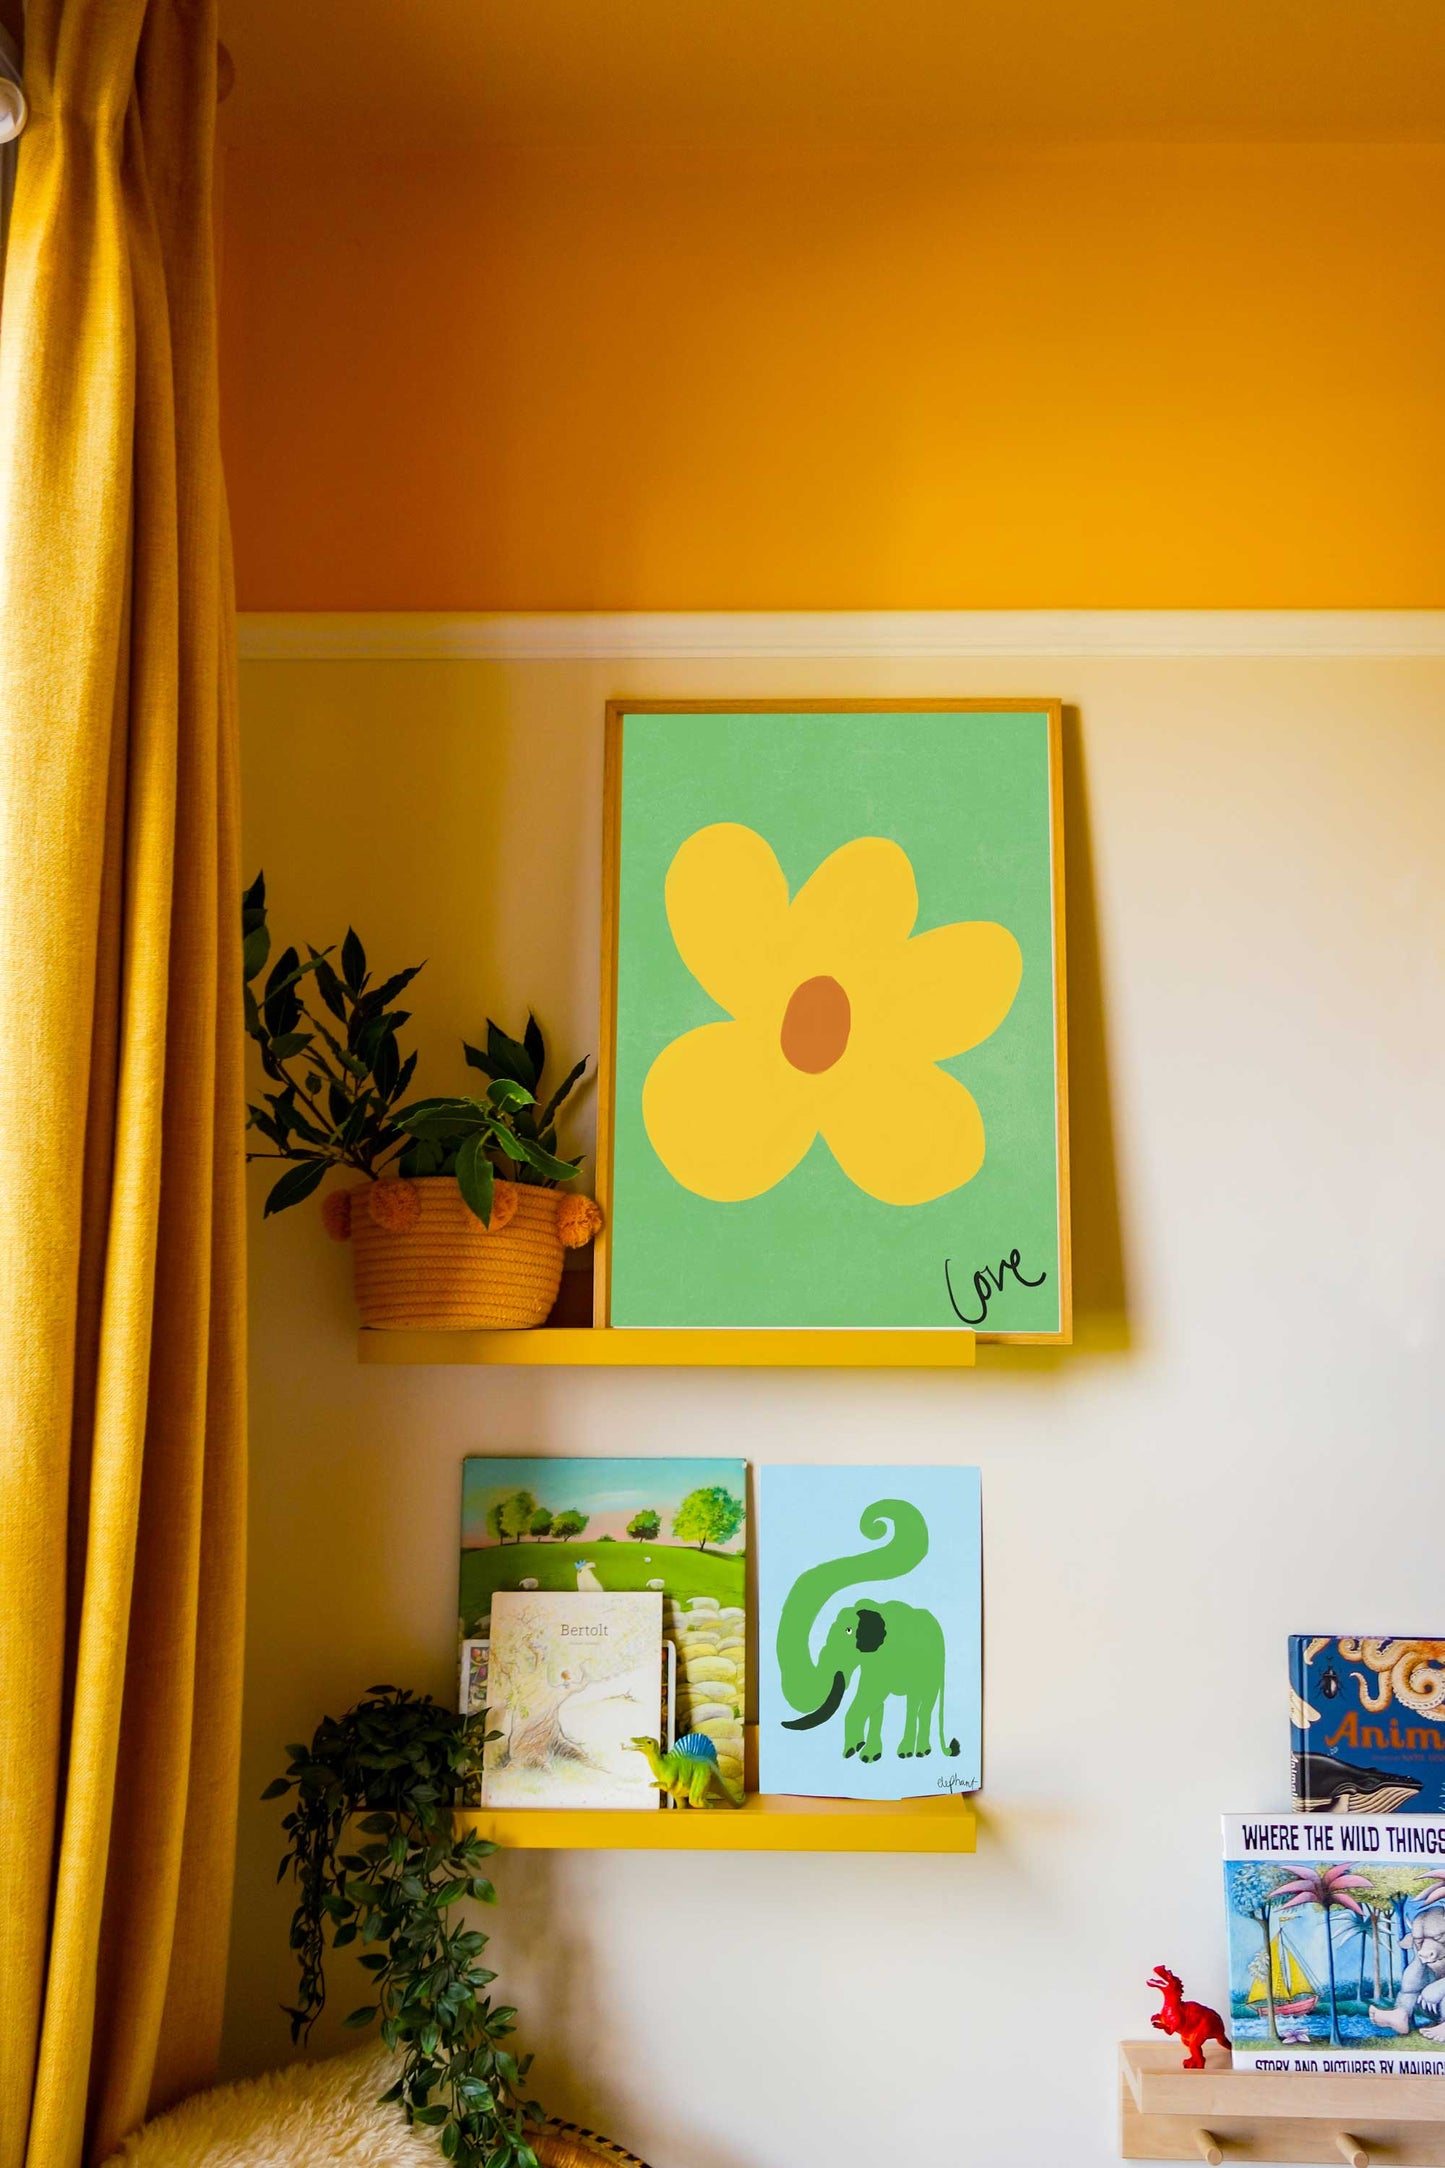 Love Flower Print - Green, Yellow, Brown Fine Art Print